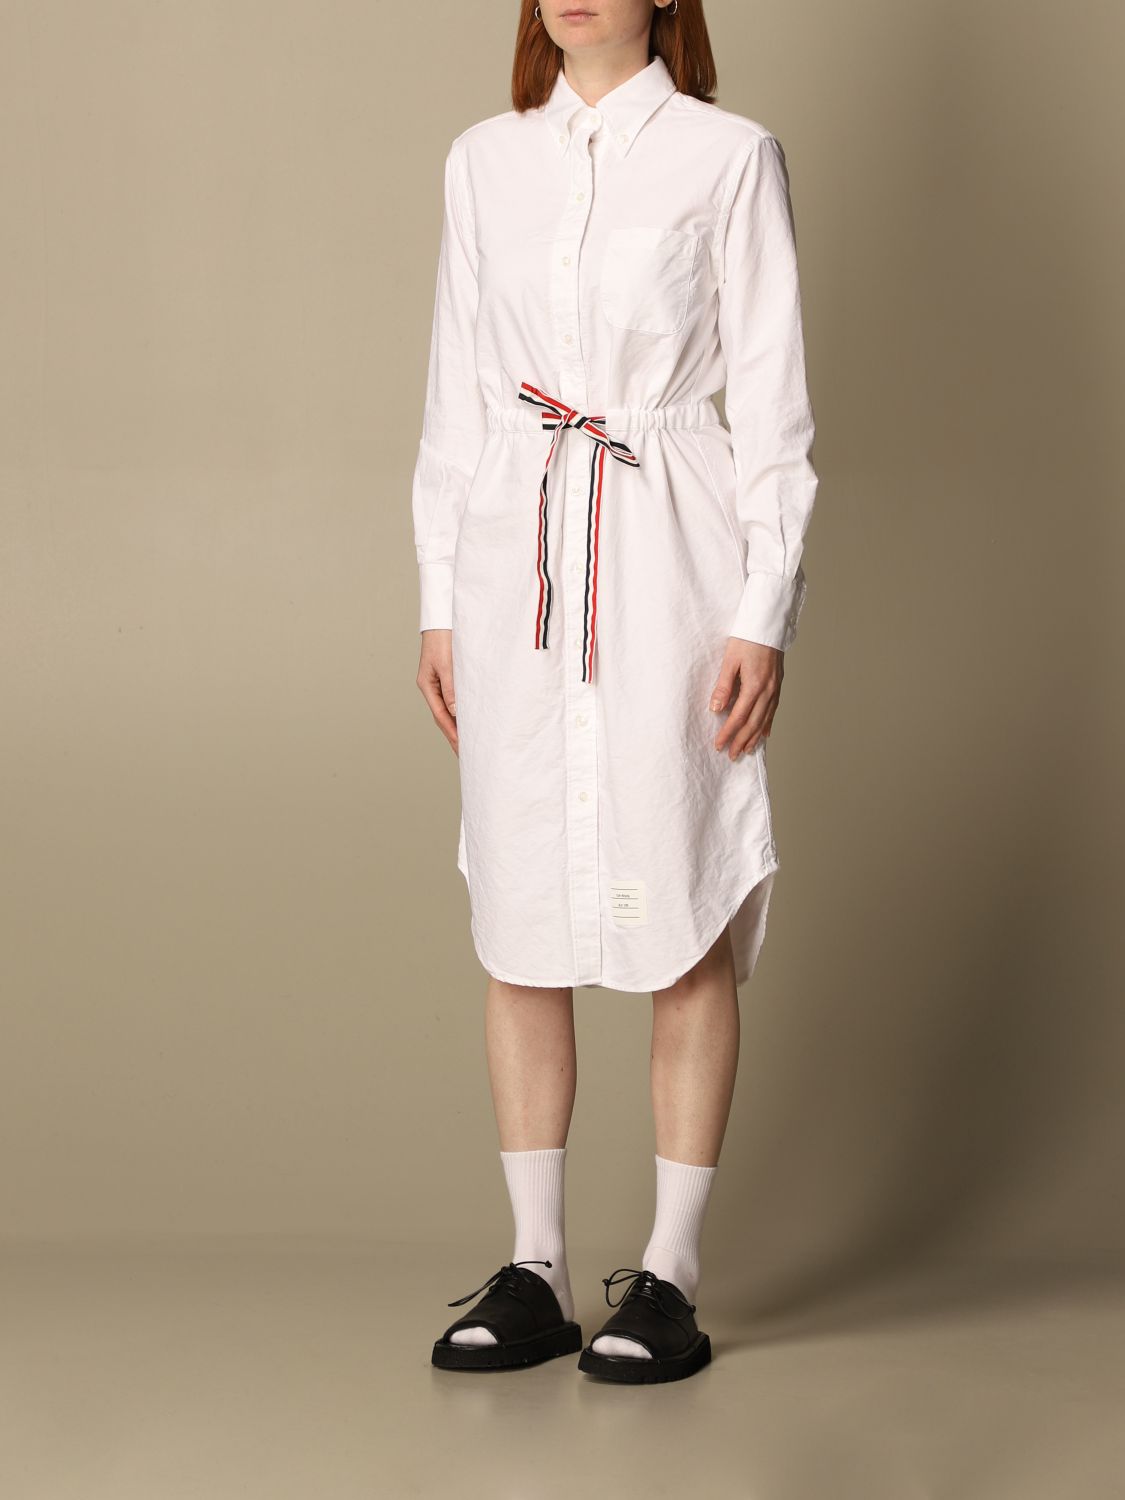 THOM BROWNE: Dress women | Dress Thom Browne Women White | Dress Thom ...